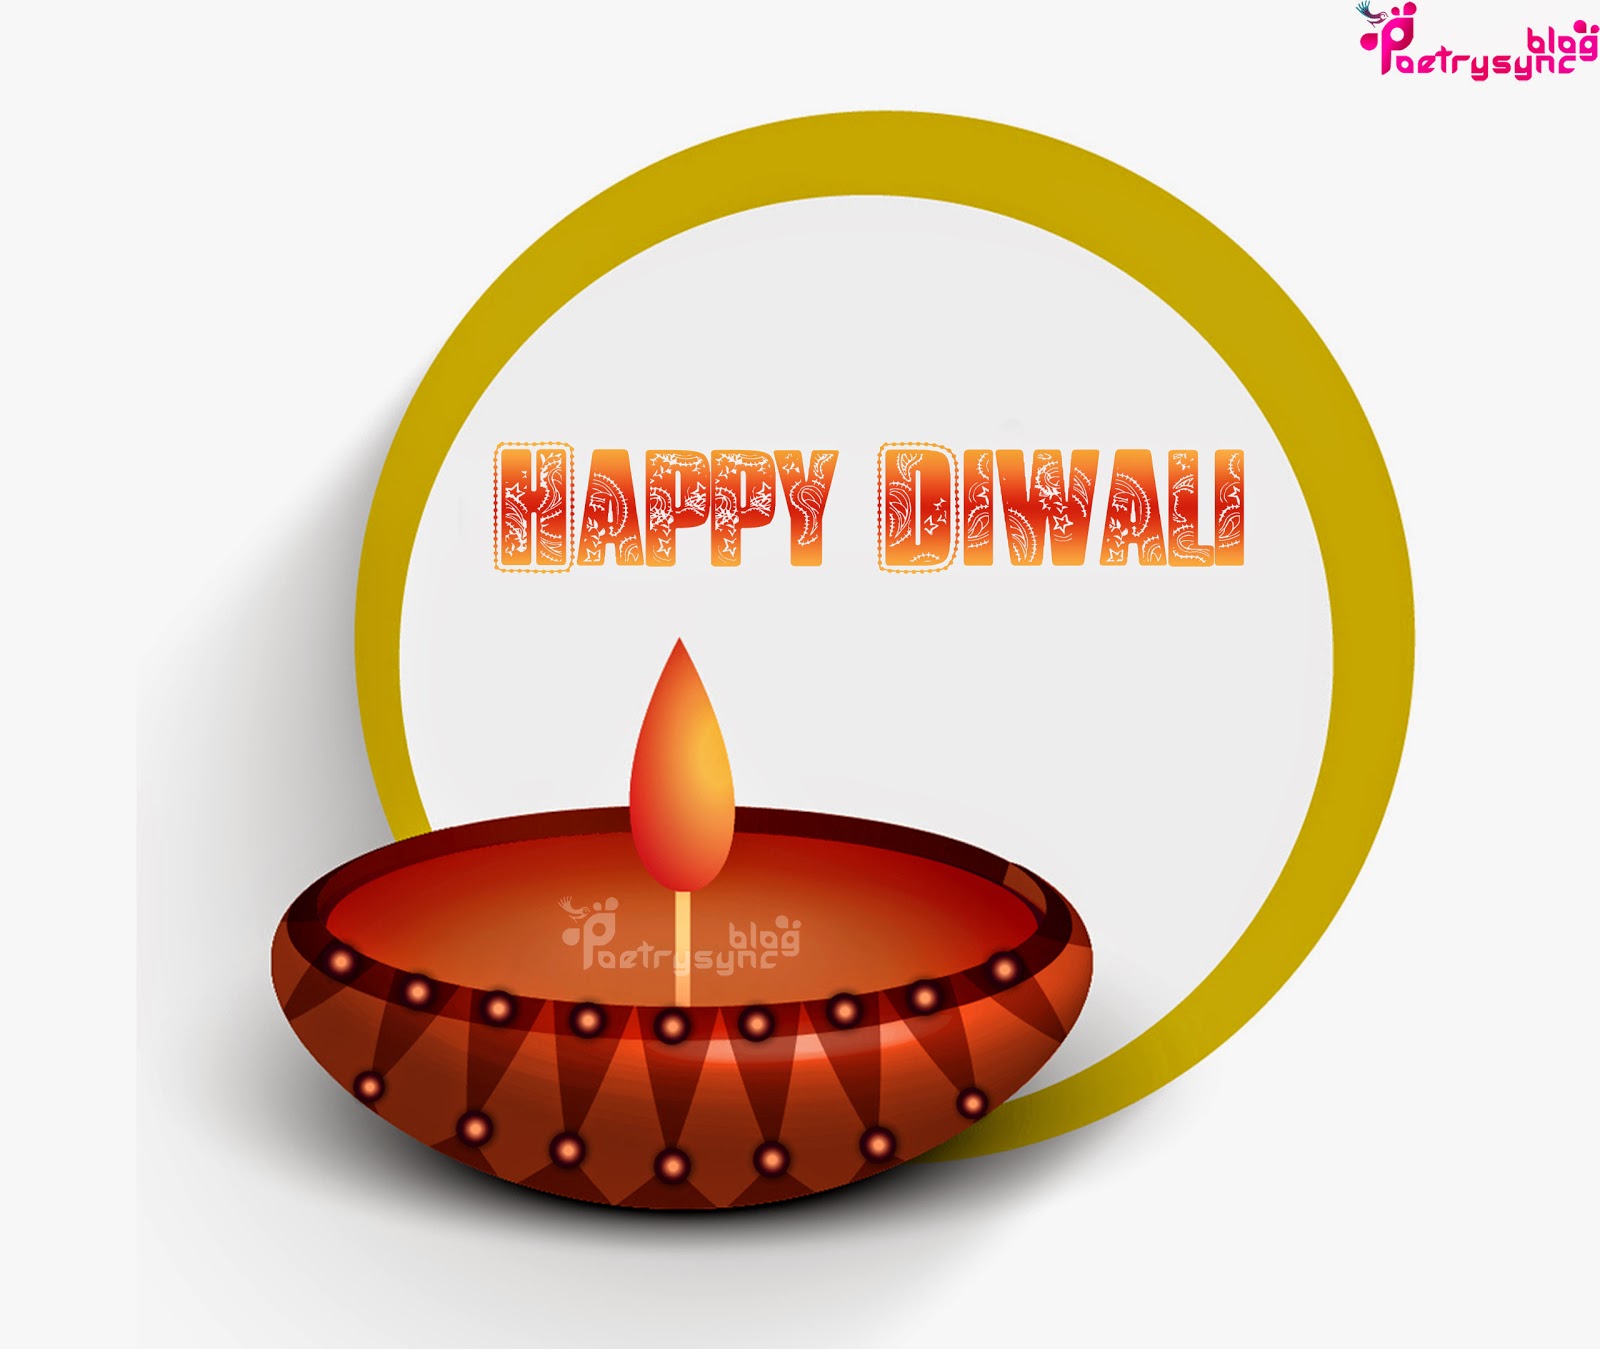 Happy-diwali-festival-dia-image-hd-By-Poetrysync1blog